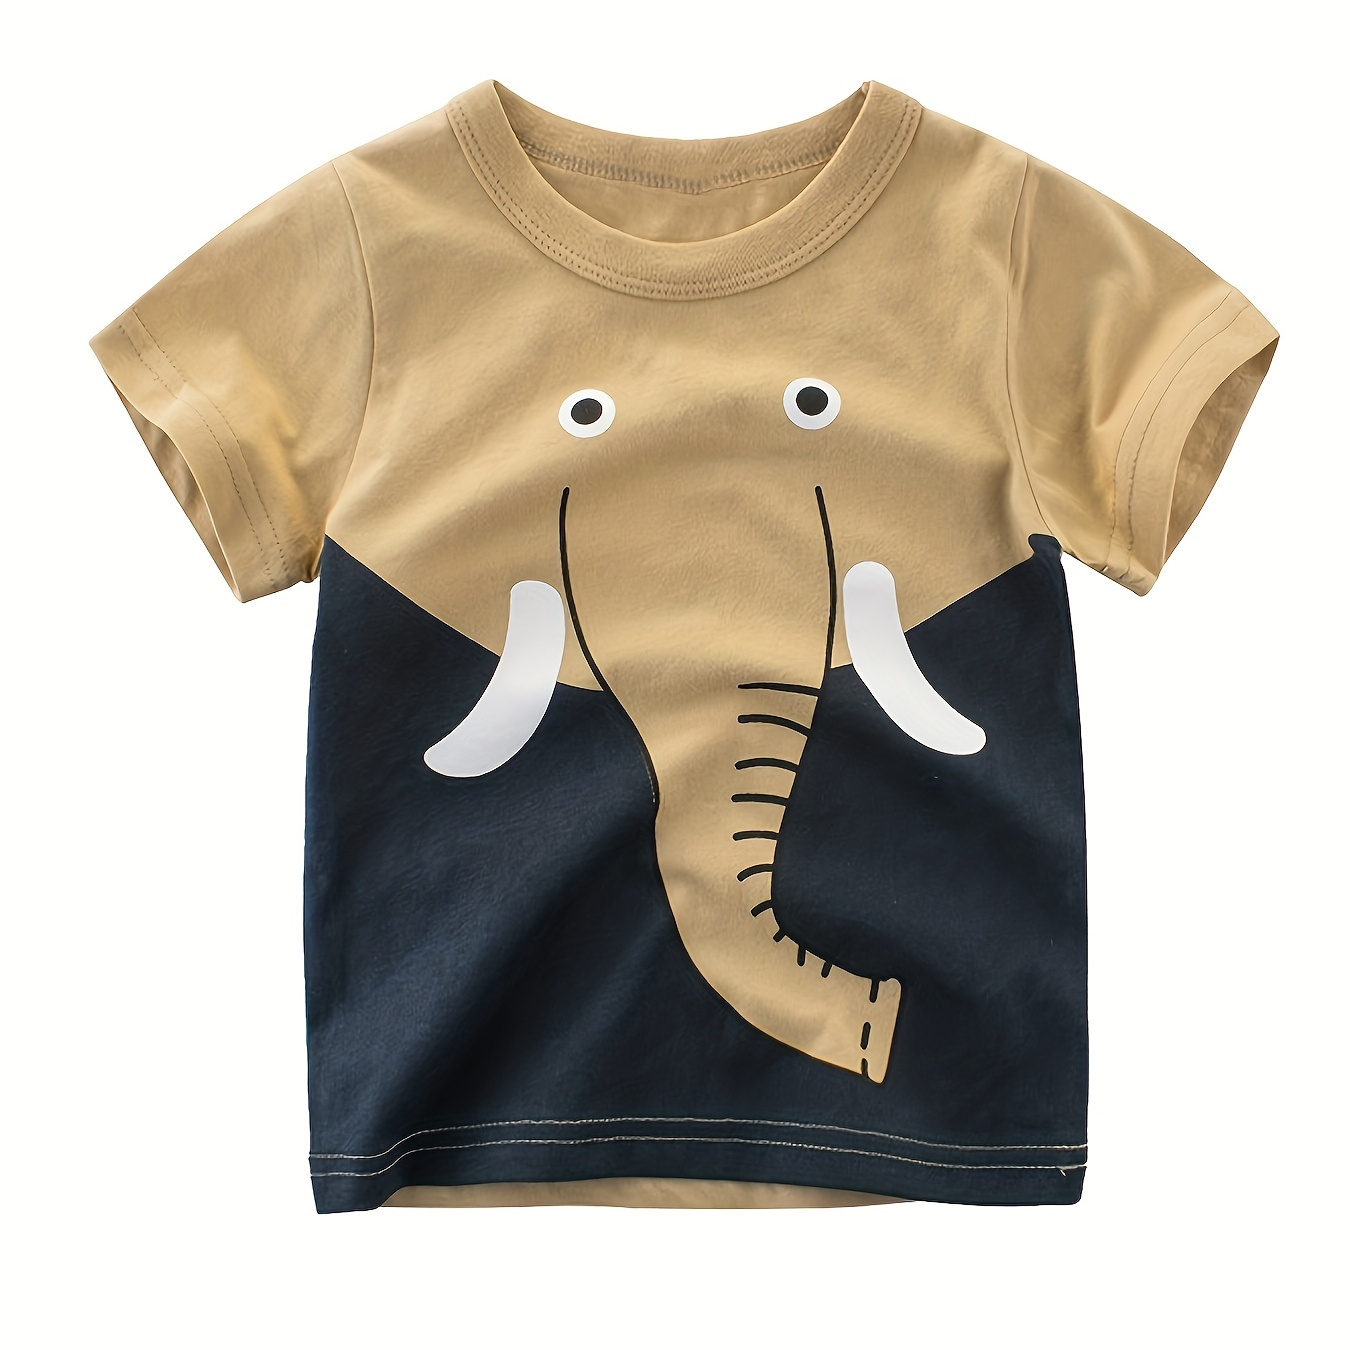 

Boys Cartoon Elephant Cotton T-shirt Tee Top Short Sleeves Crew Neck Summer Casual Kids Clothes